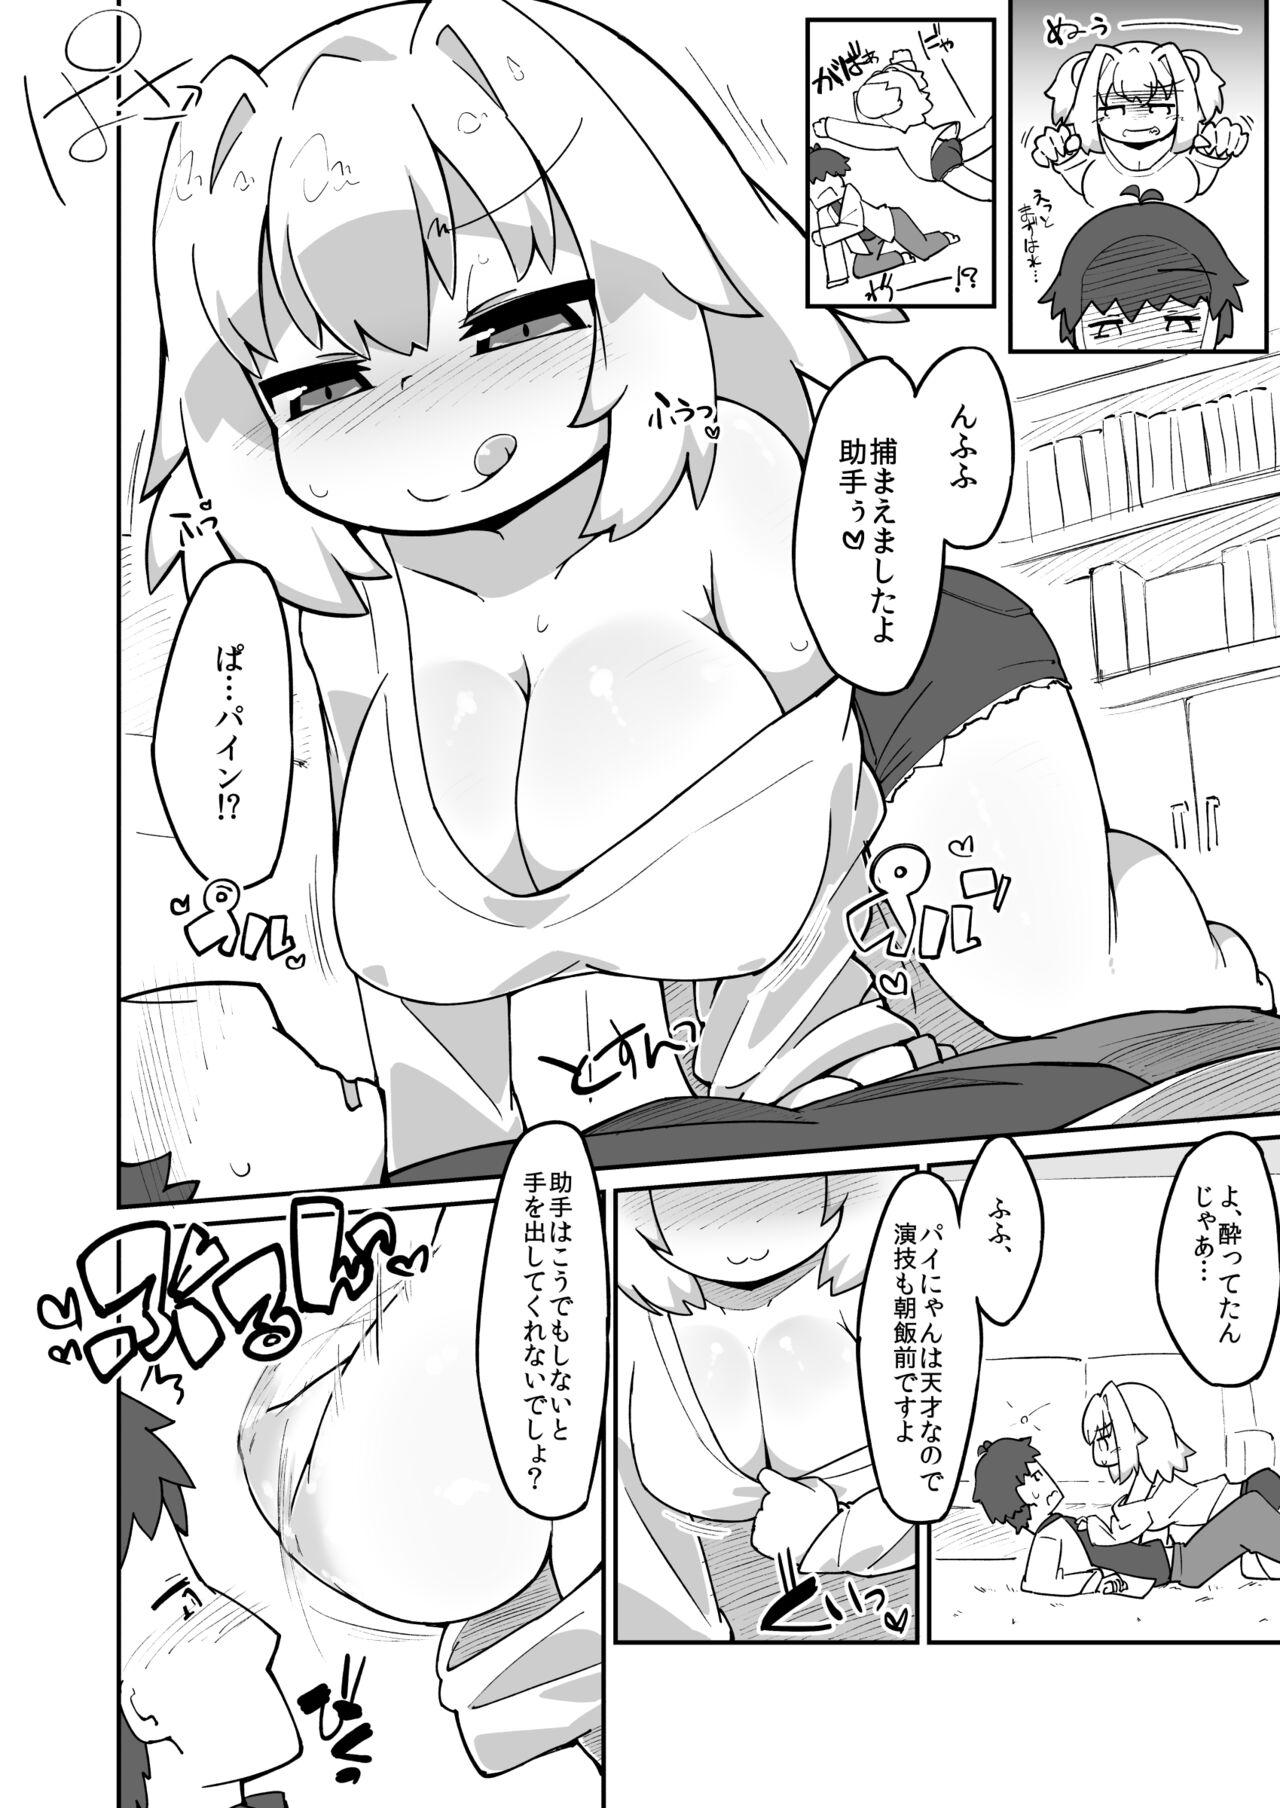 Amature Pi-nyan Ecchi Manga - Bomber girl Piroca - Picture 2